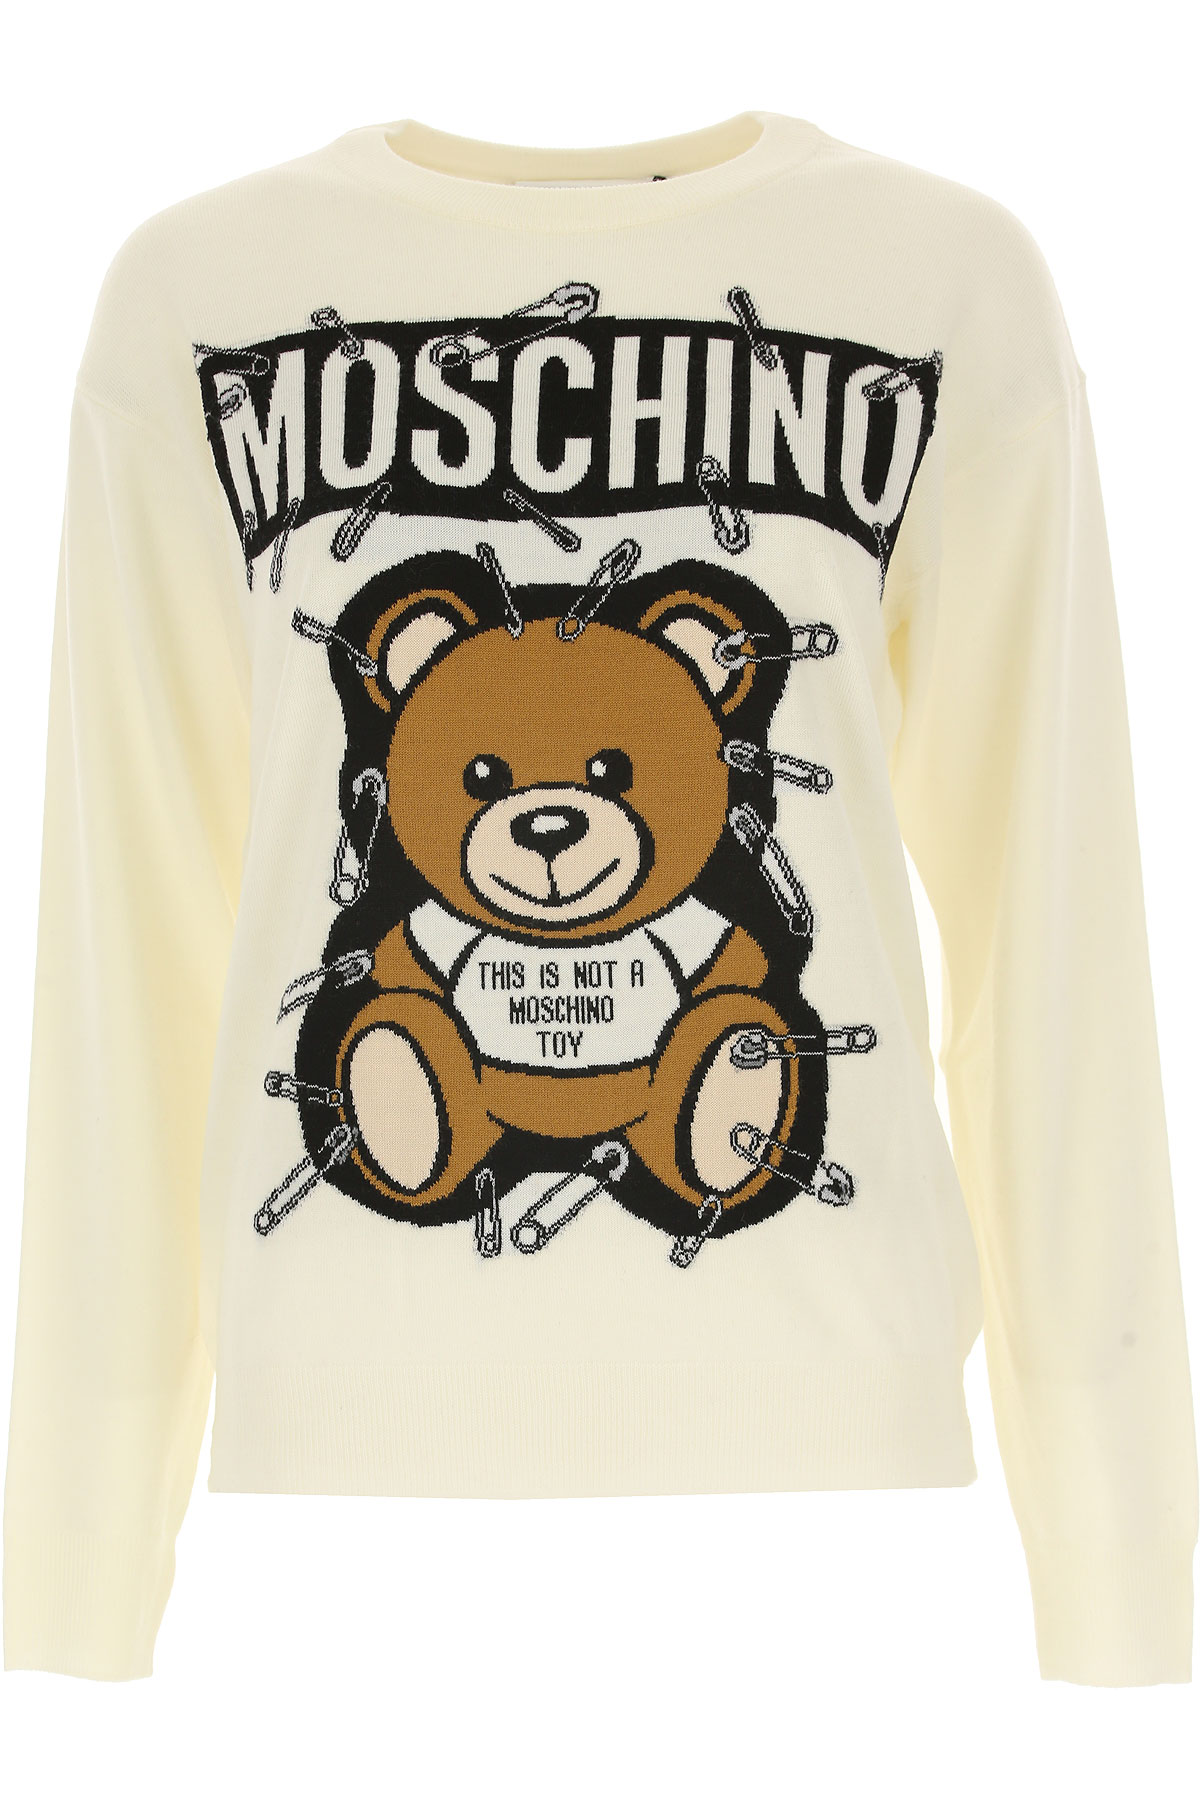 Москино одежда. Moschino одежда. Москино бренд одежды. Бренд с мишкой одежда Москино. Кофта фирмы Moschino.